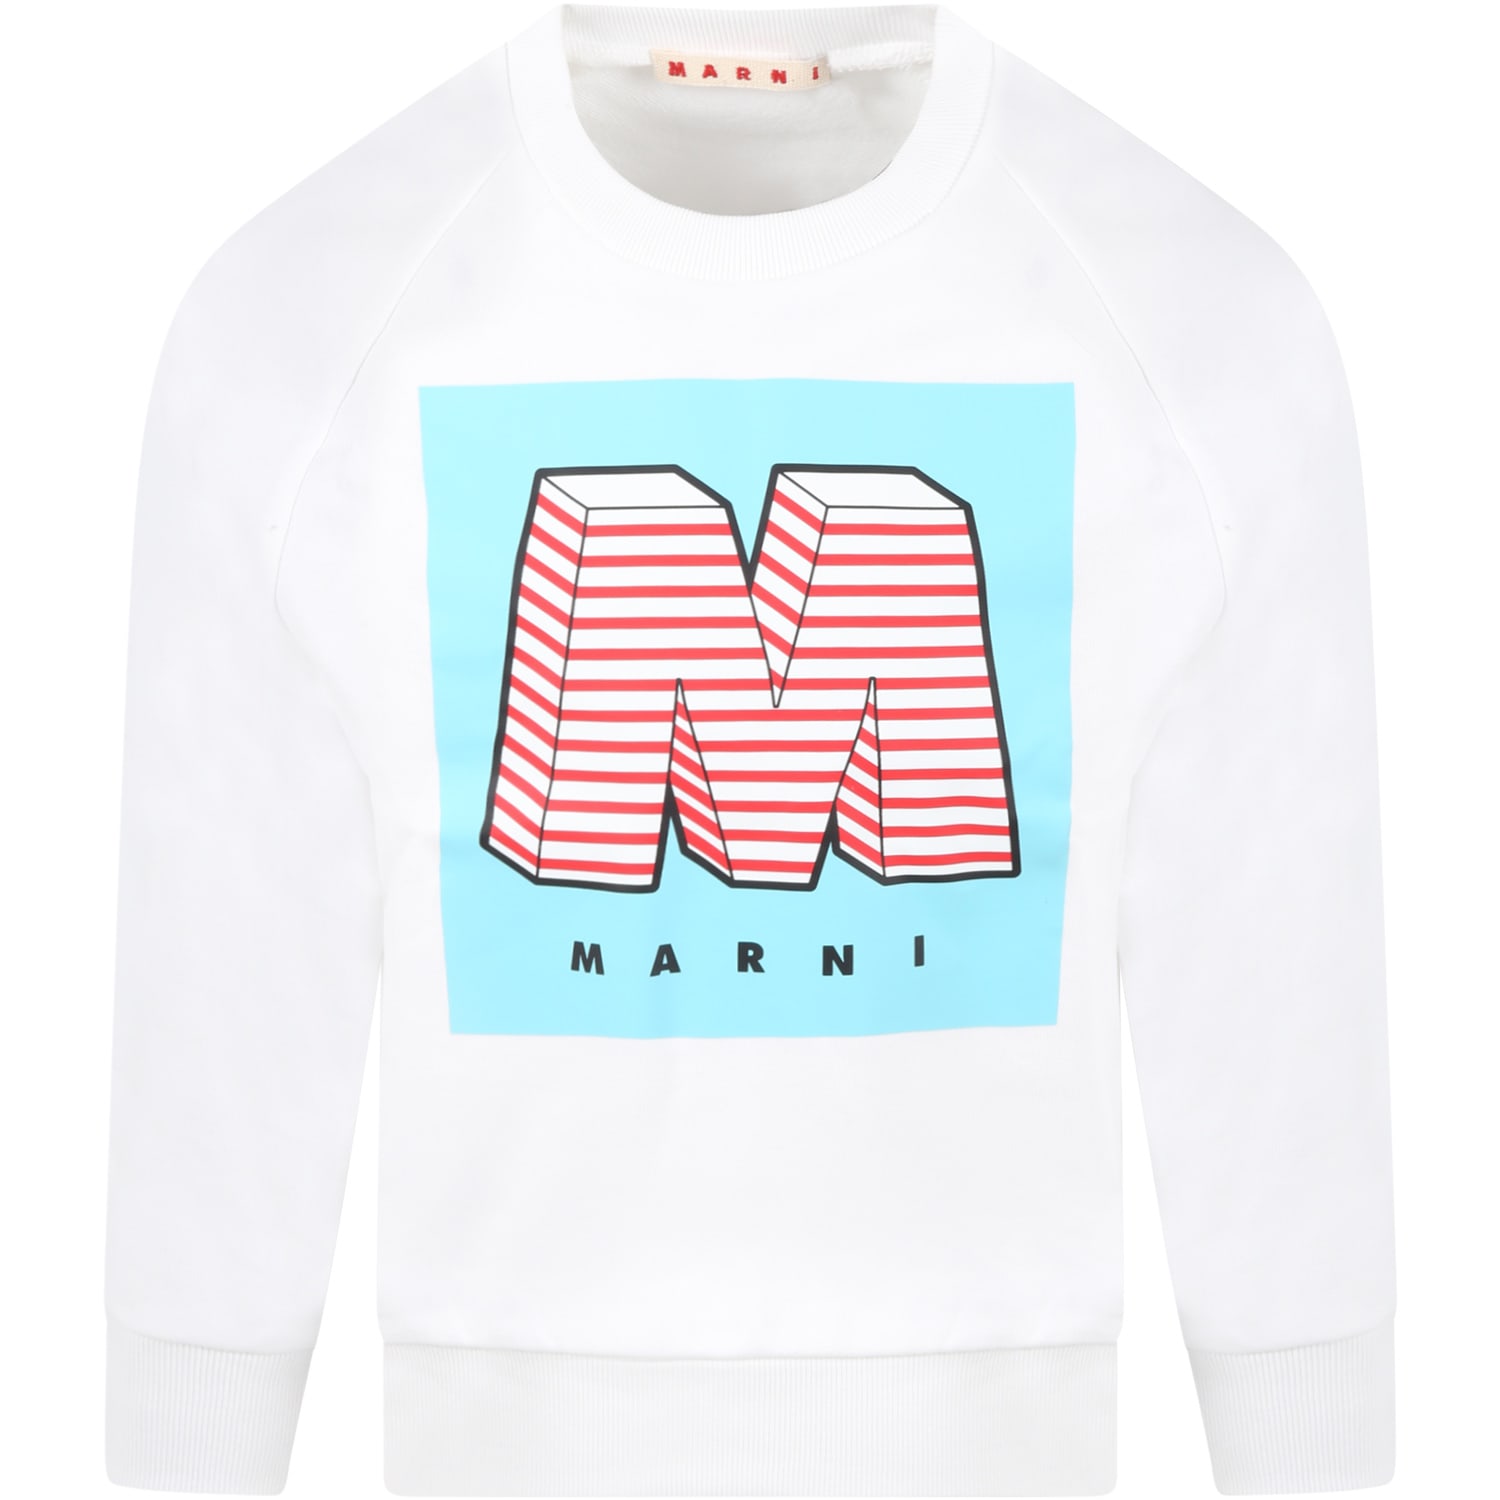 Marni White Sweatshirt For Kids With Logo